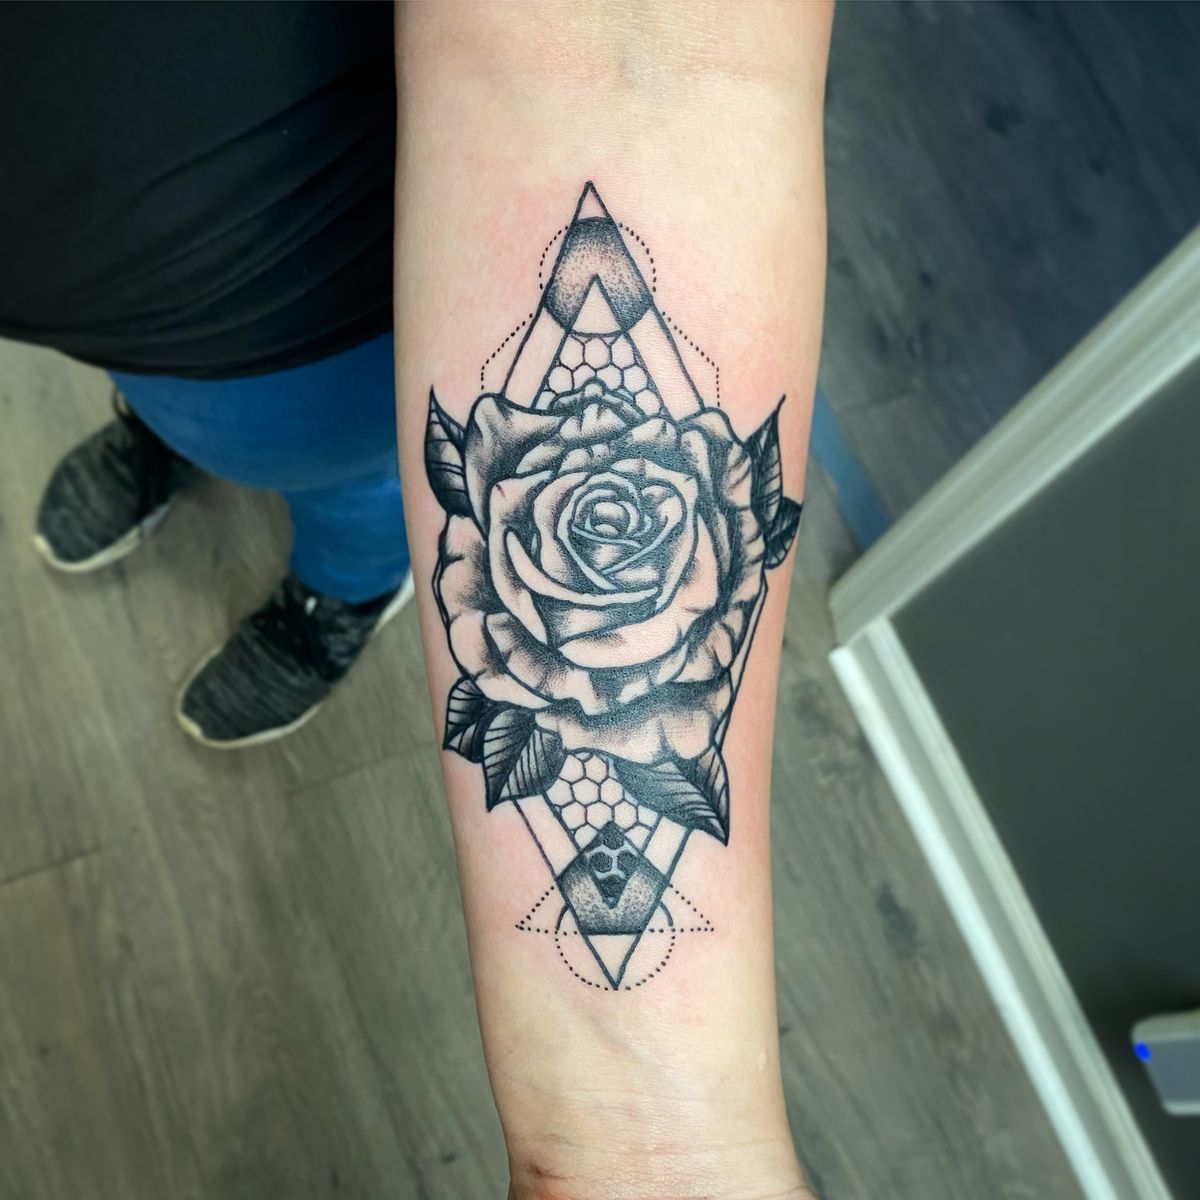 Tattoo uploaded by Tyler Price • Tattoodo